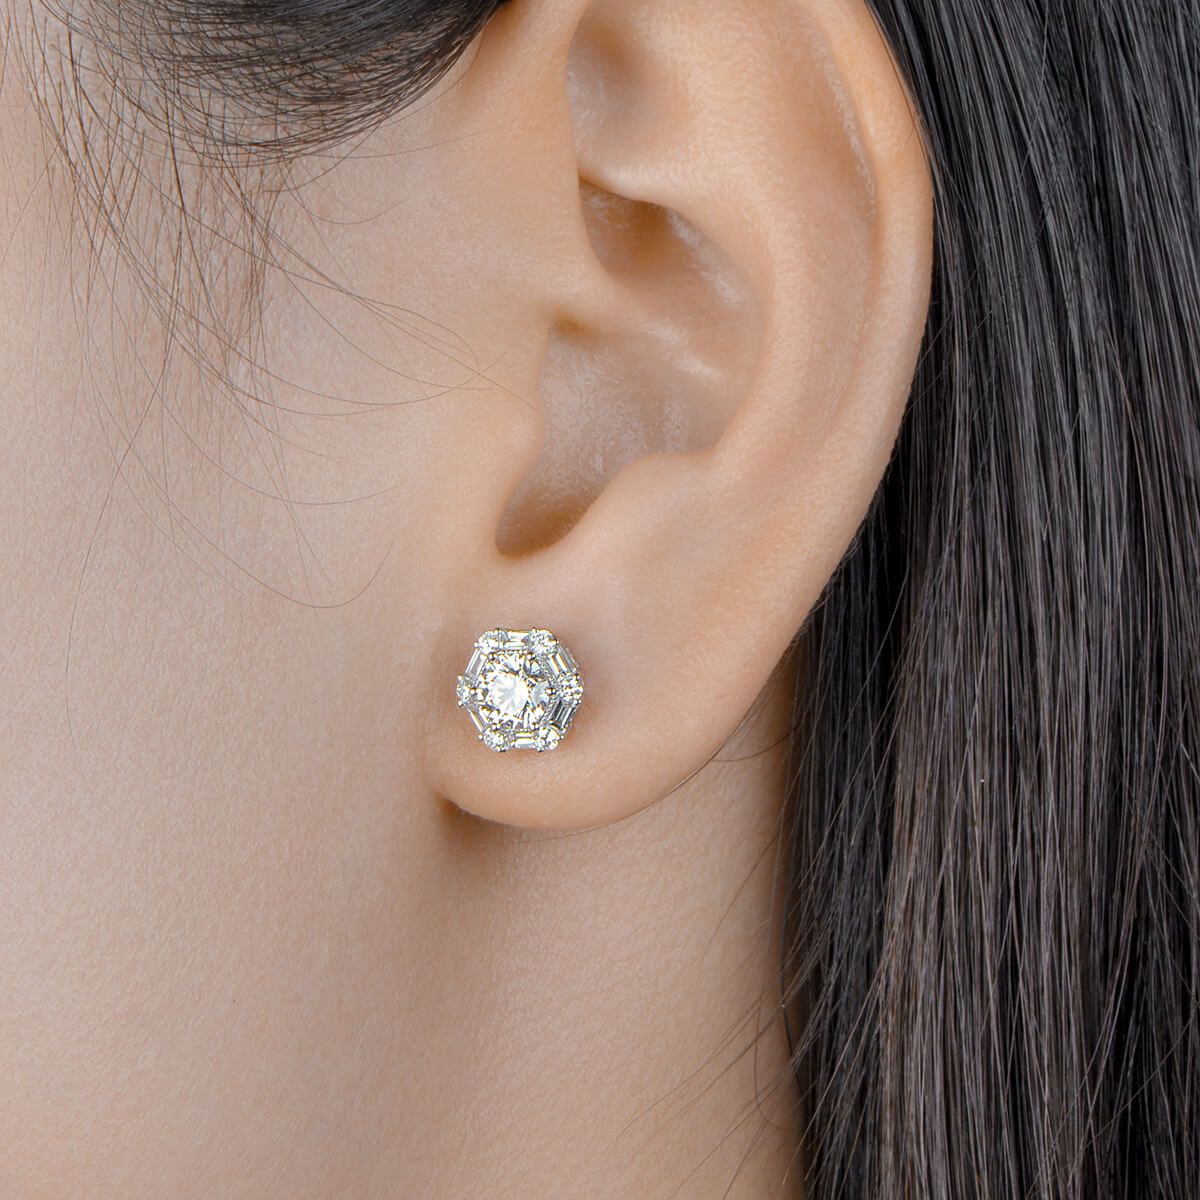  White Diamond Earrings, 1.75 Ct. TW, Round shape, NGTC Certified, JCEW05338242